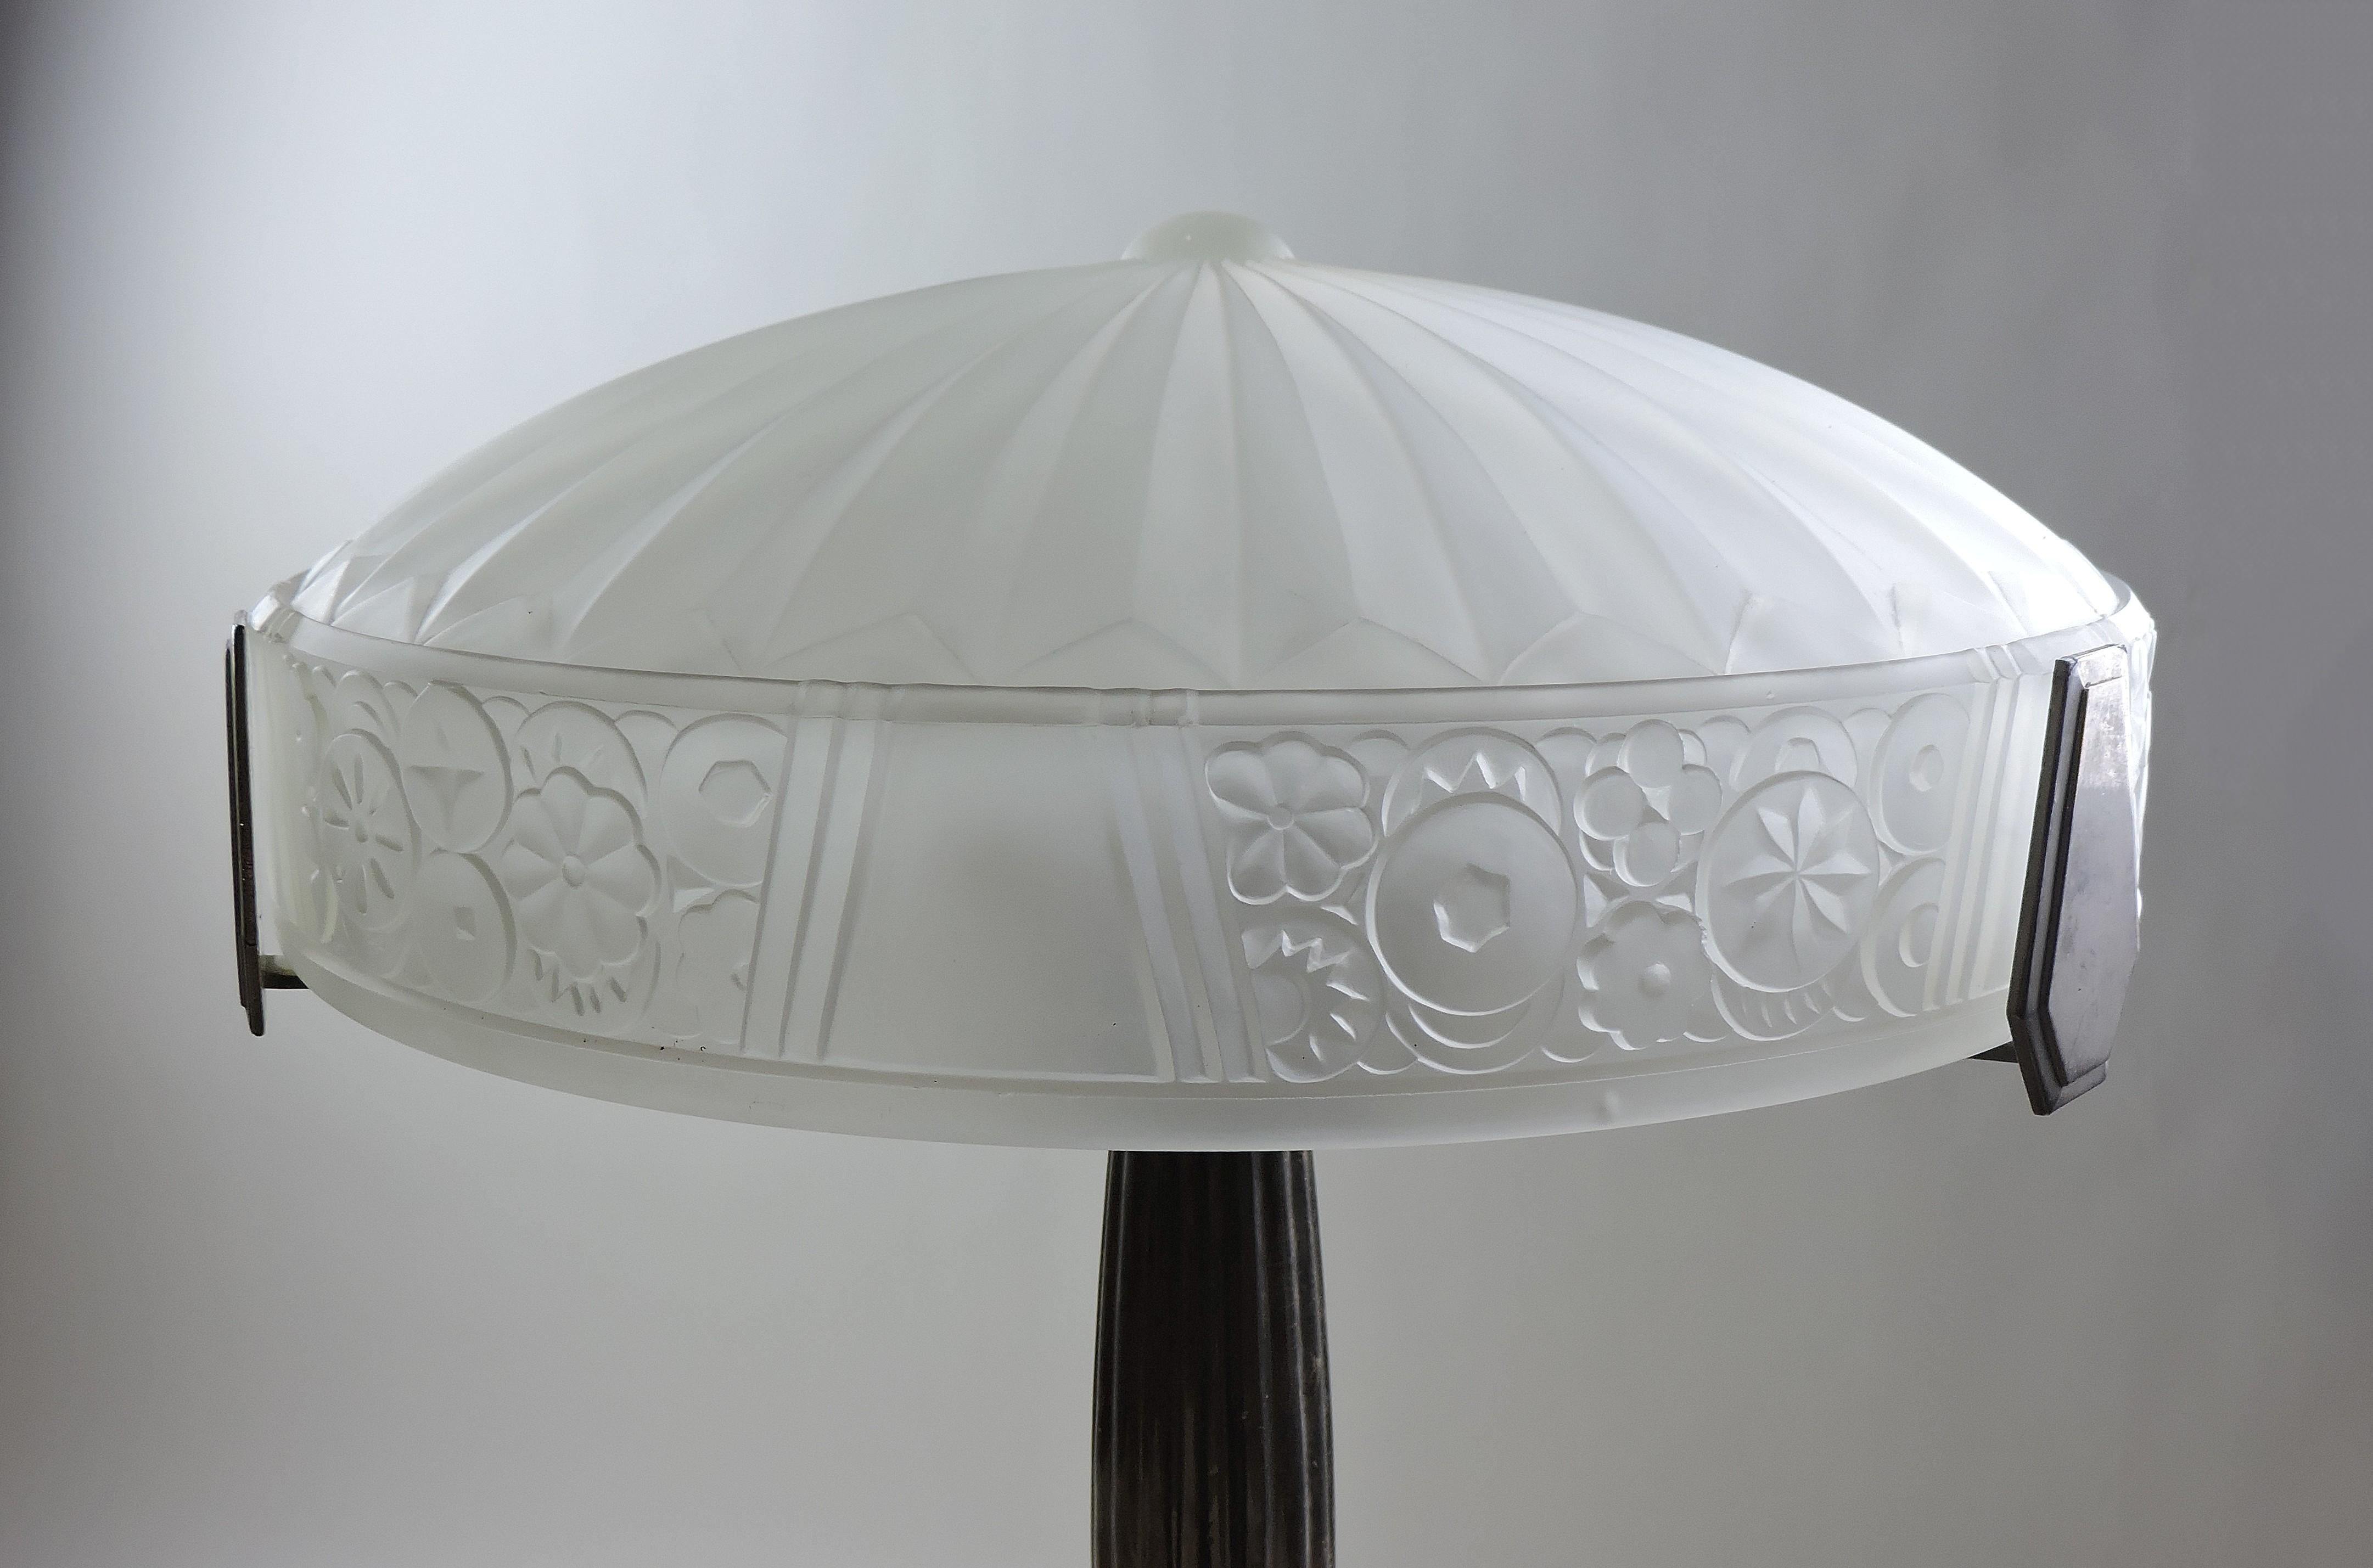 reproduction art deco table lamps